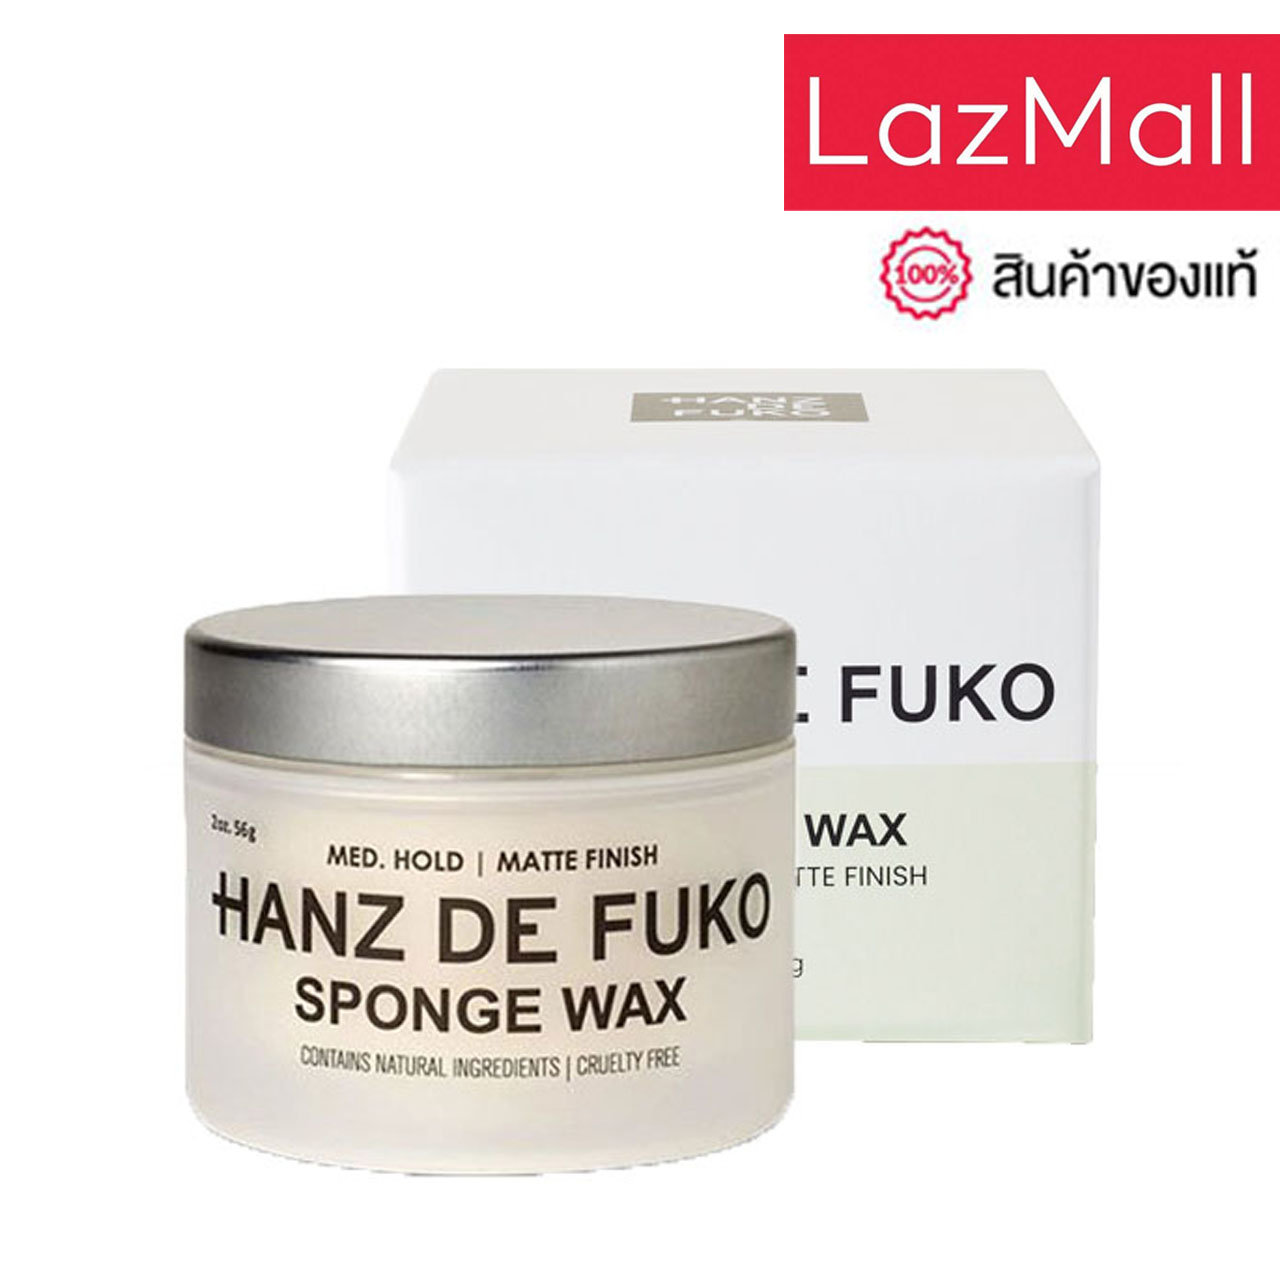 Hanz de Fuko - Sponge Wax(2 oz / 56 ml)))ผลิตภัณฑ์เซ็ตผมส่วนผสมจากธรรมชาติ